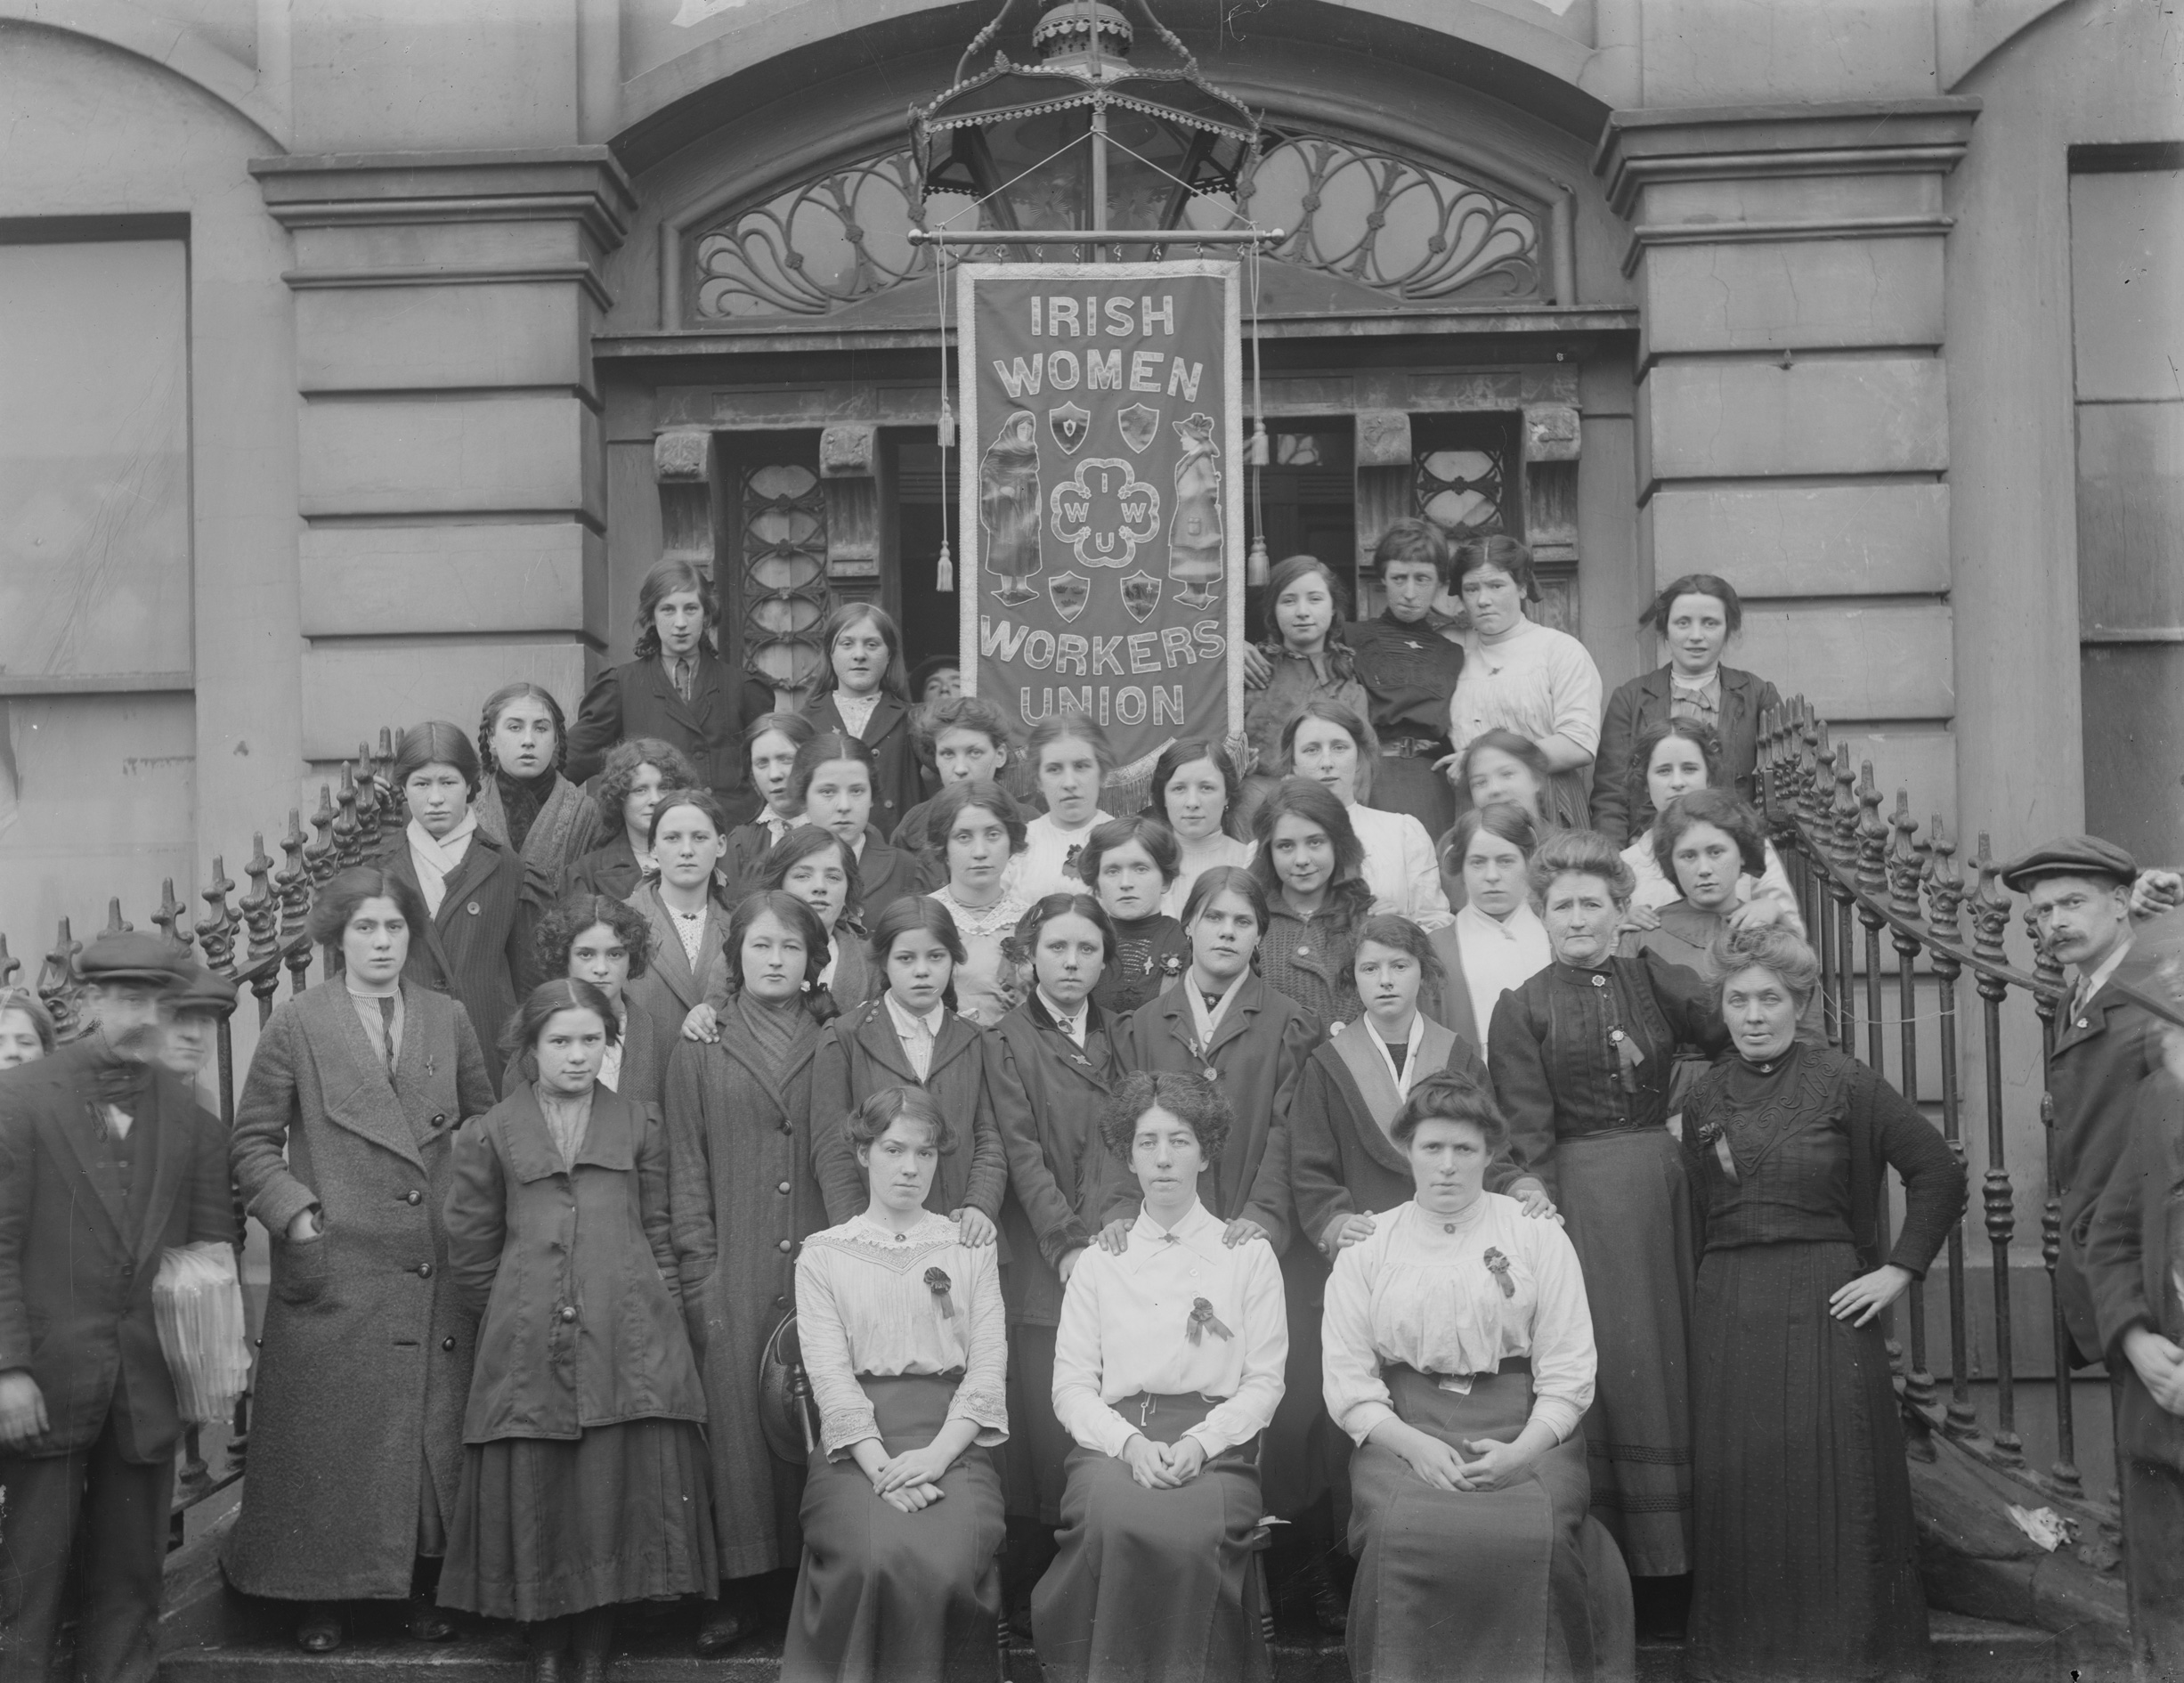 KE 203 Irish Women Workers Union